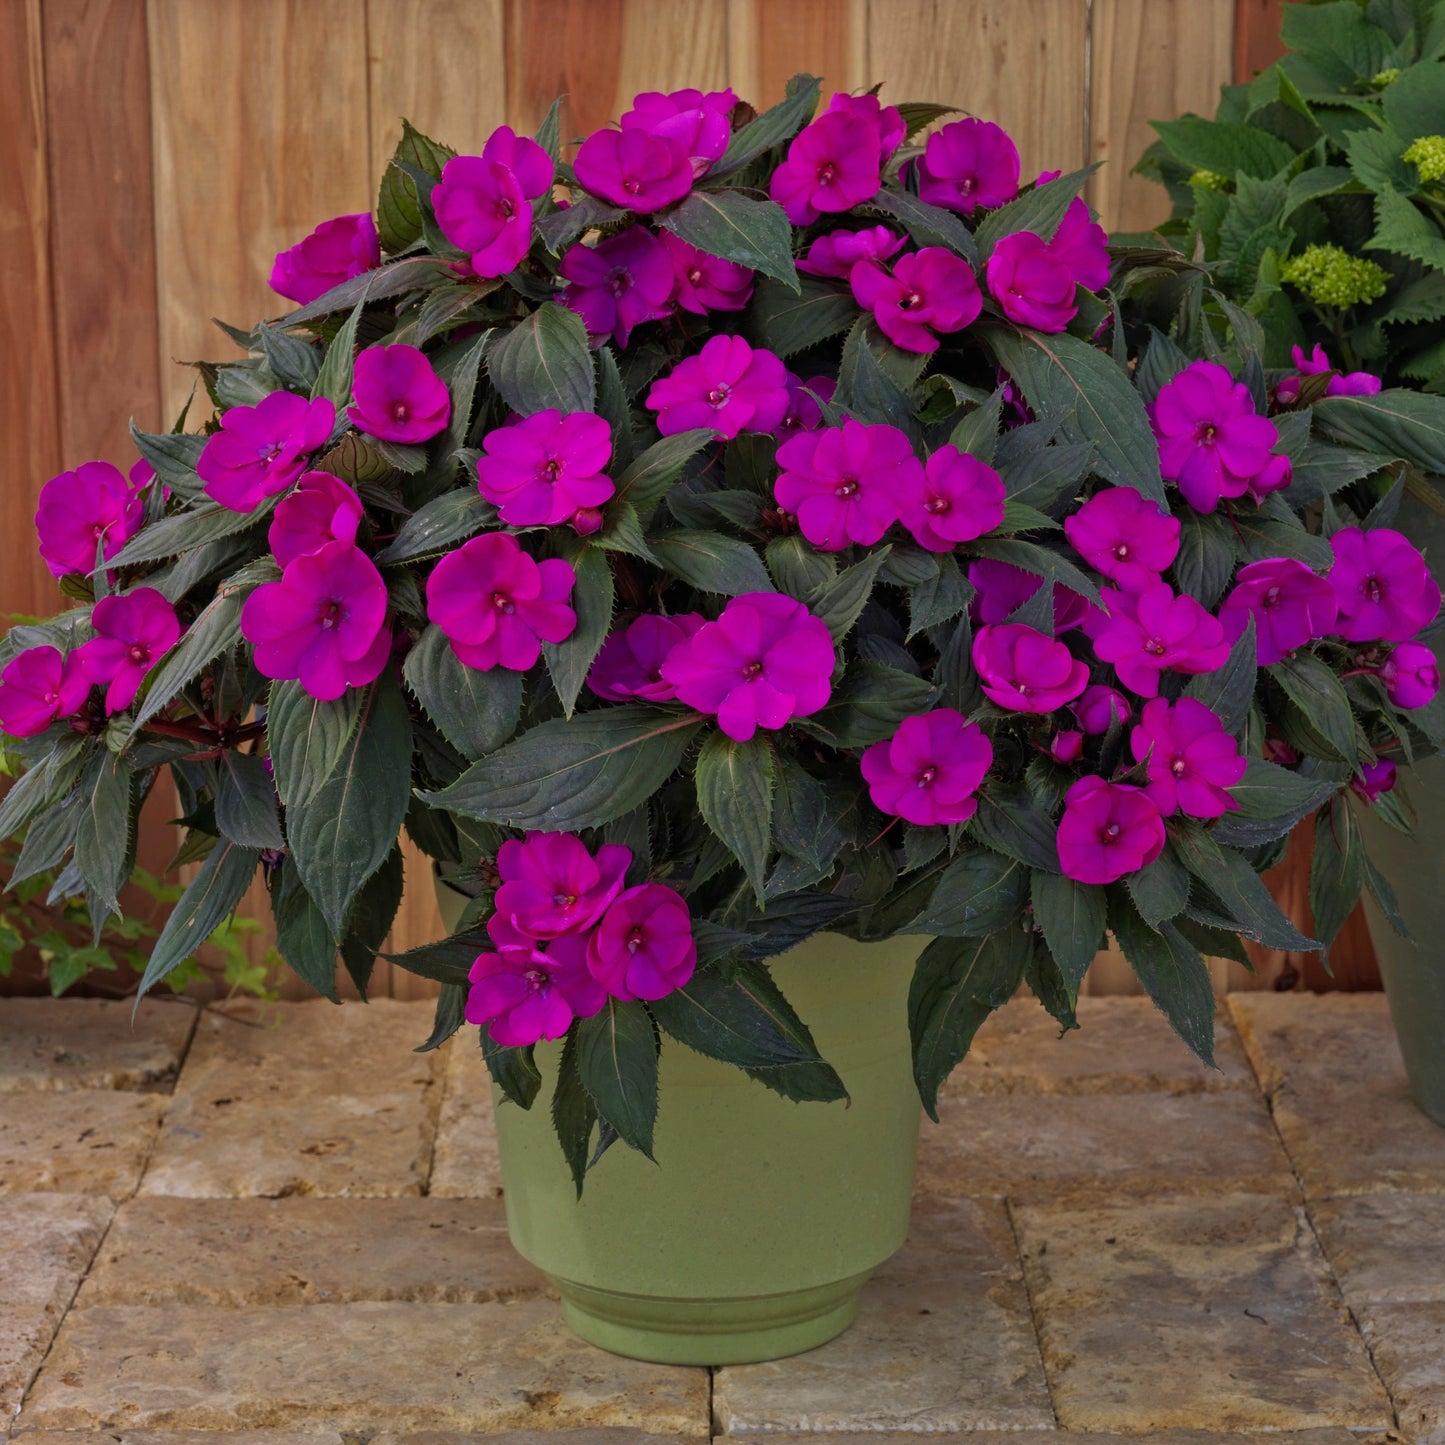 Impatiens Exotic Sunpatiens Compact Purple Plantlings Live Baby Plants 1-3in., 6-Pack